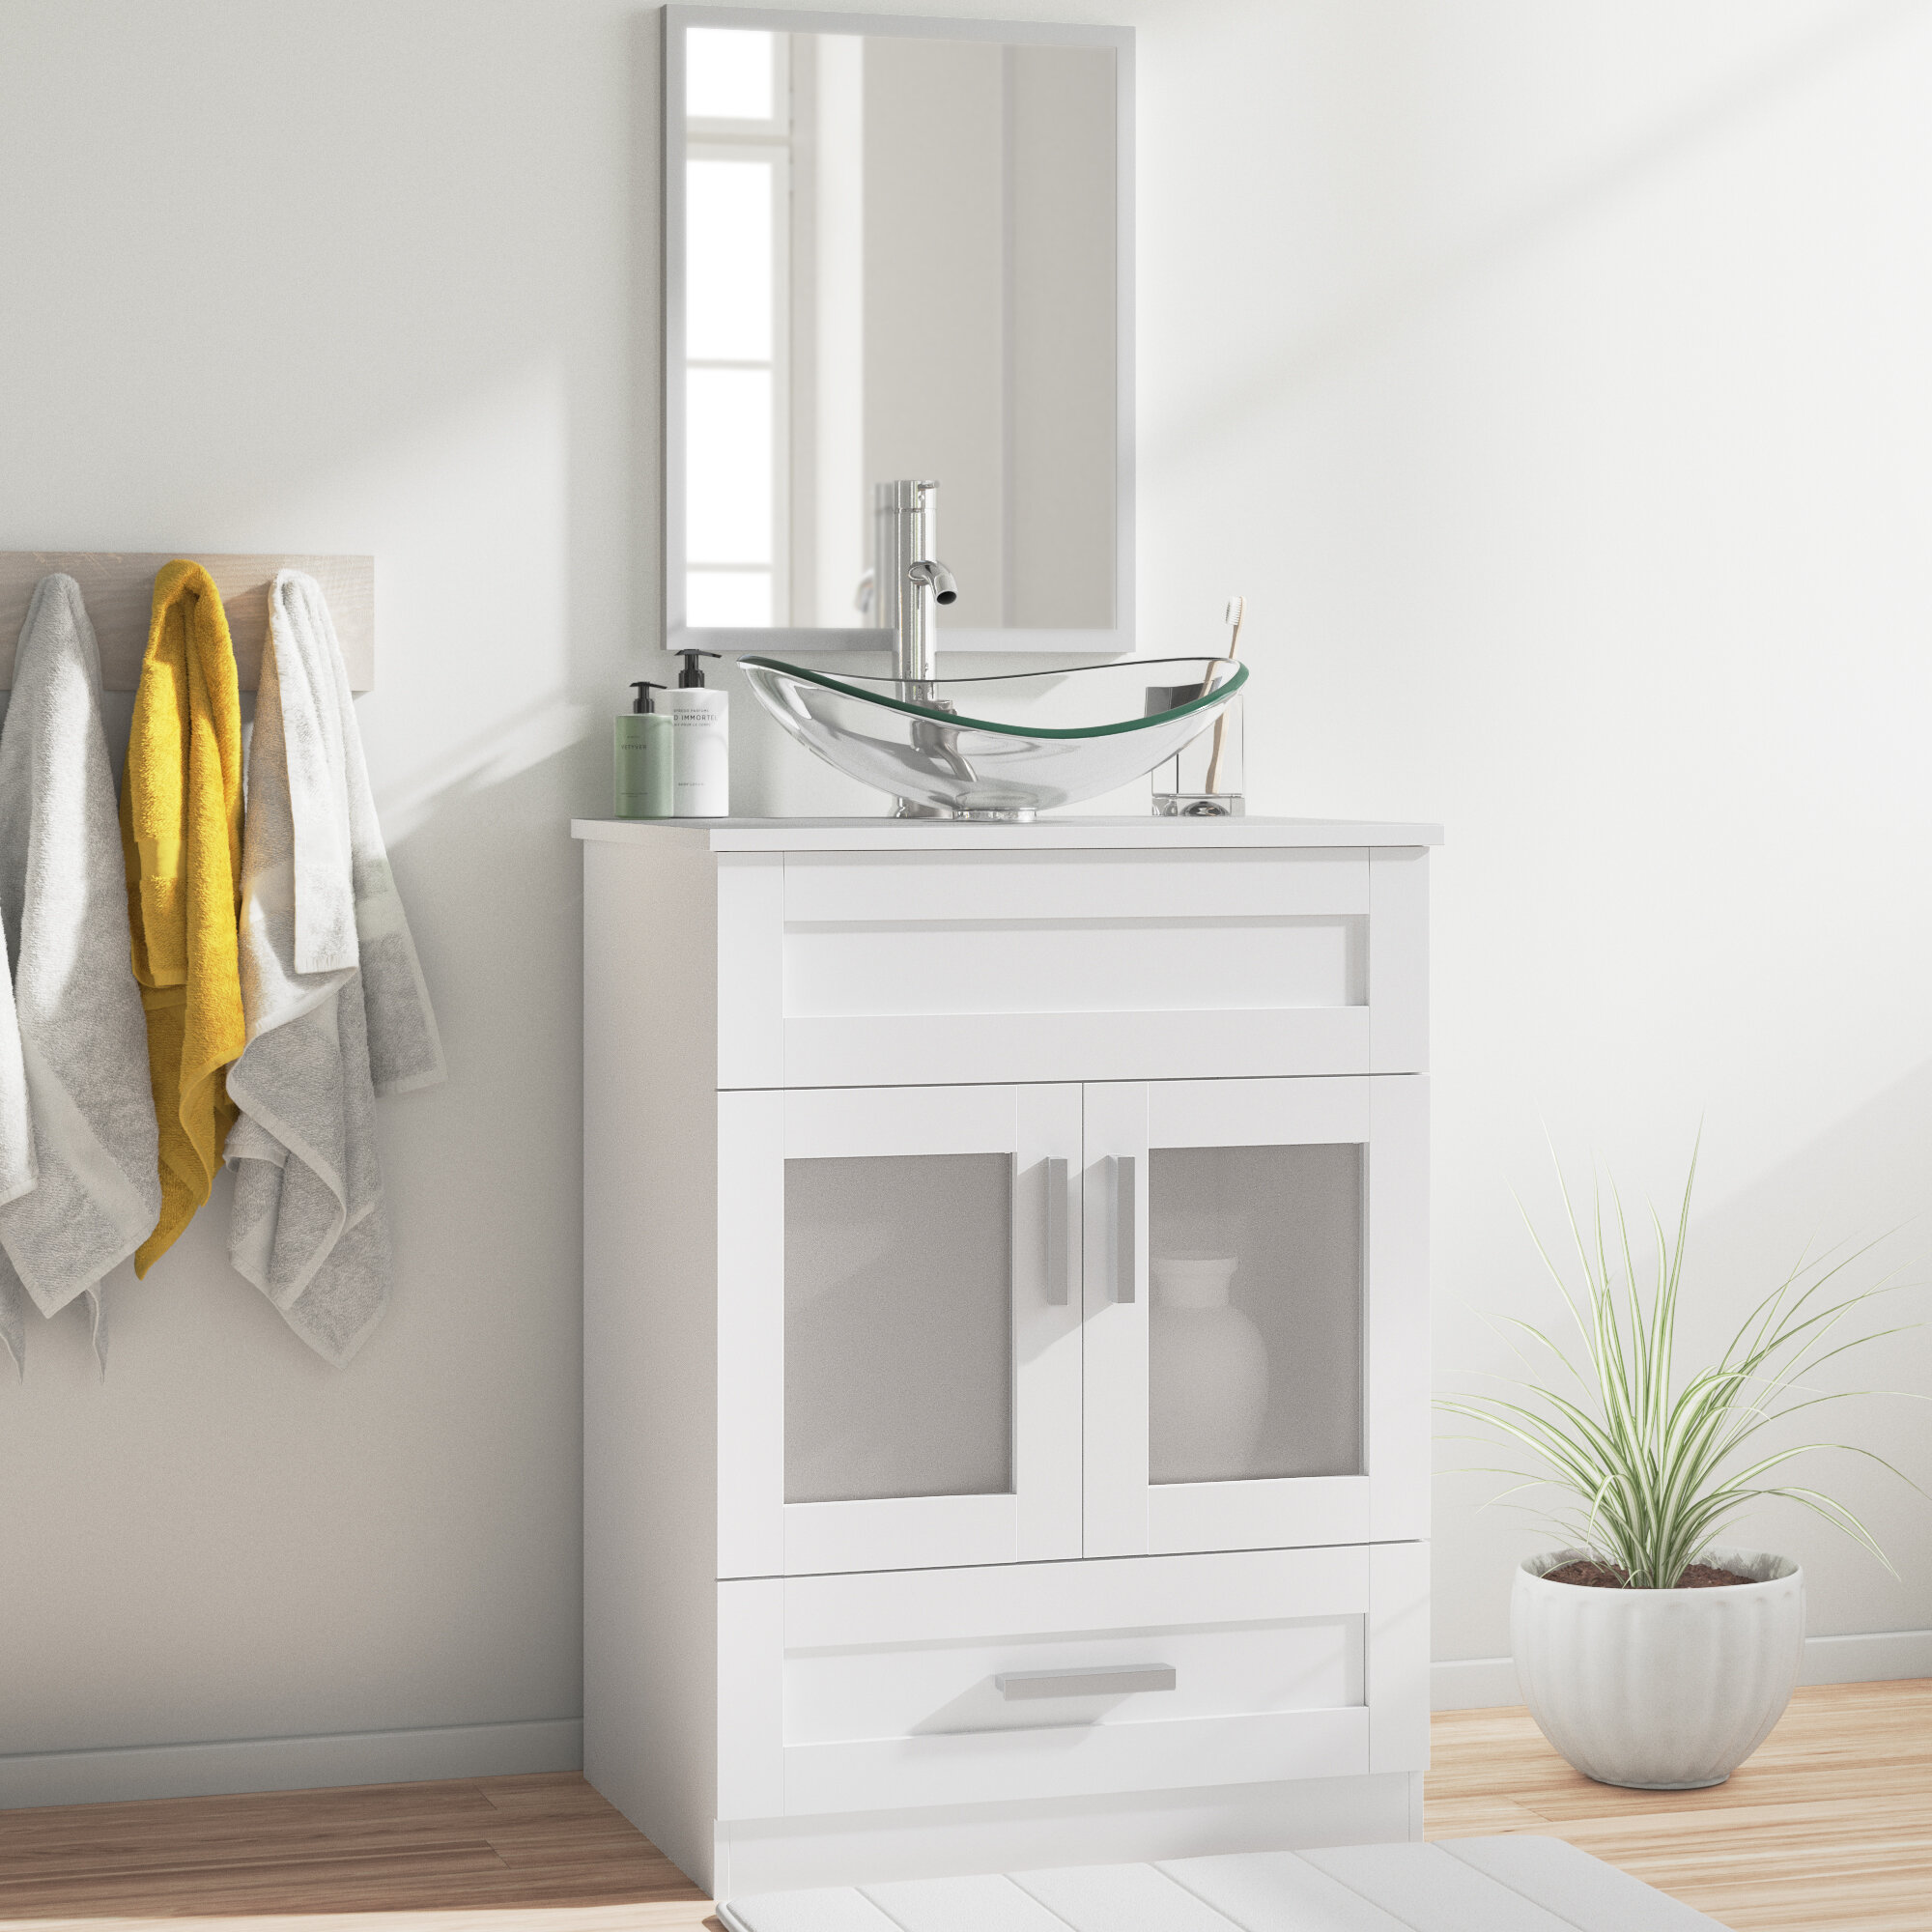 Zipcode Design™ Bevilacqua 24'' Free Standing Single Bathroom